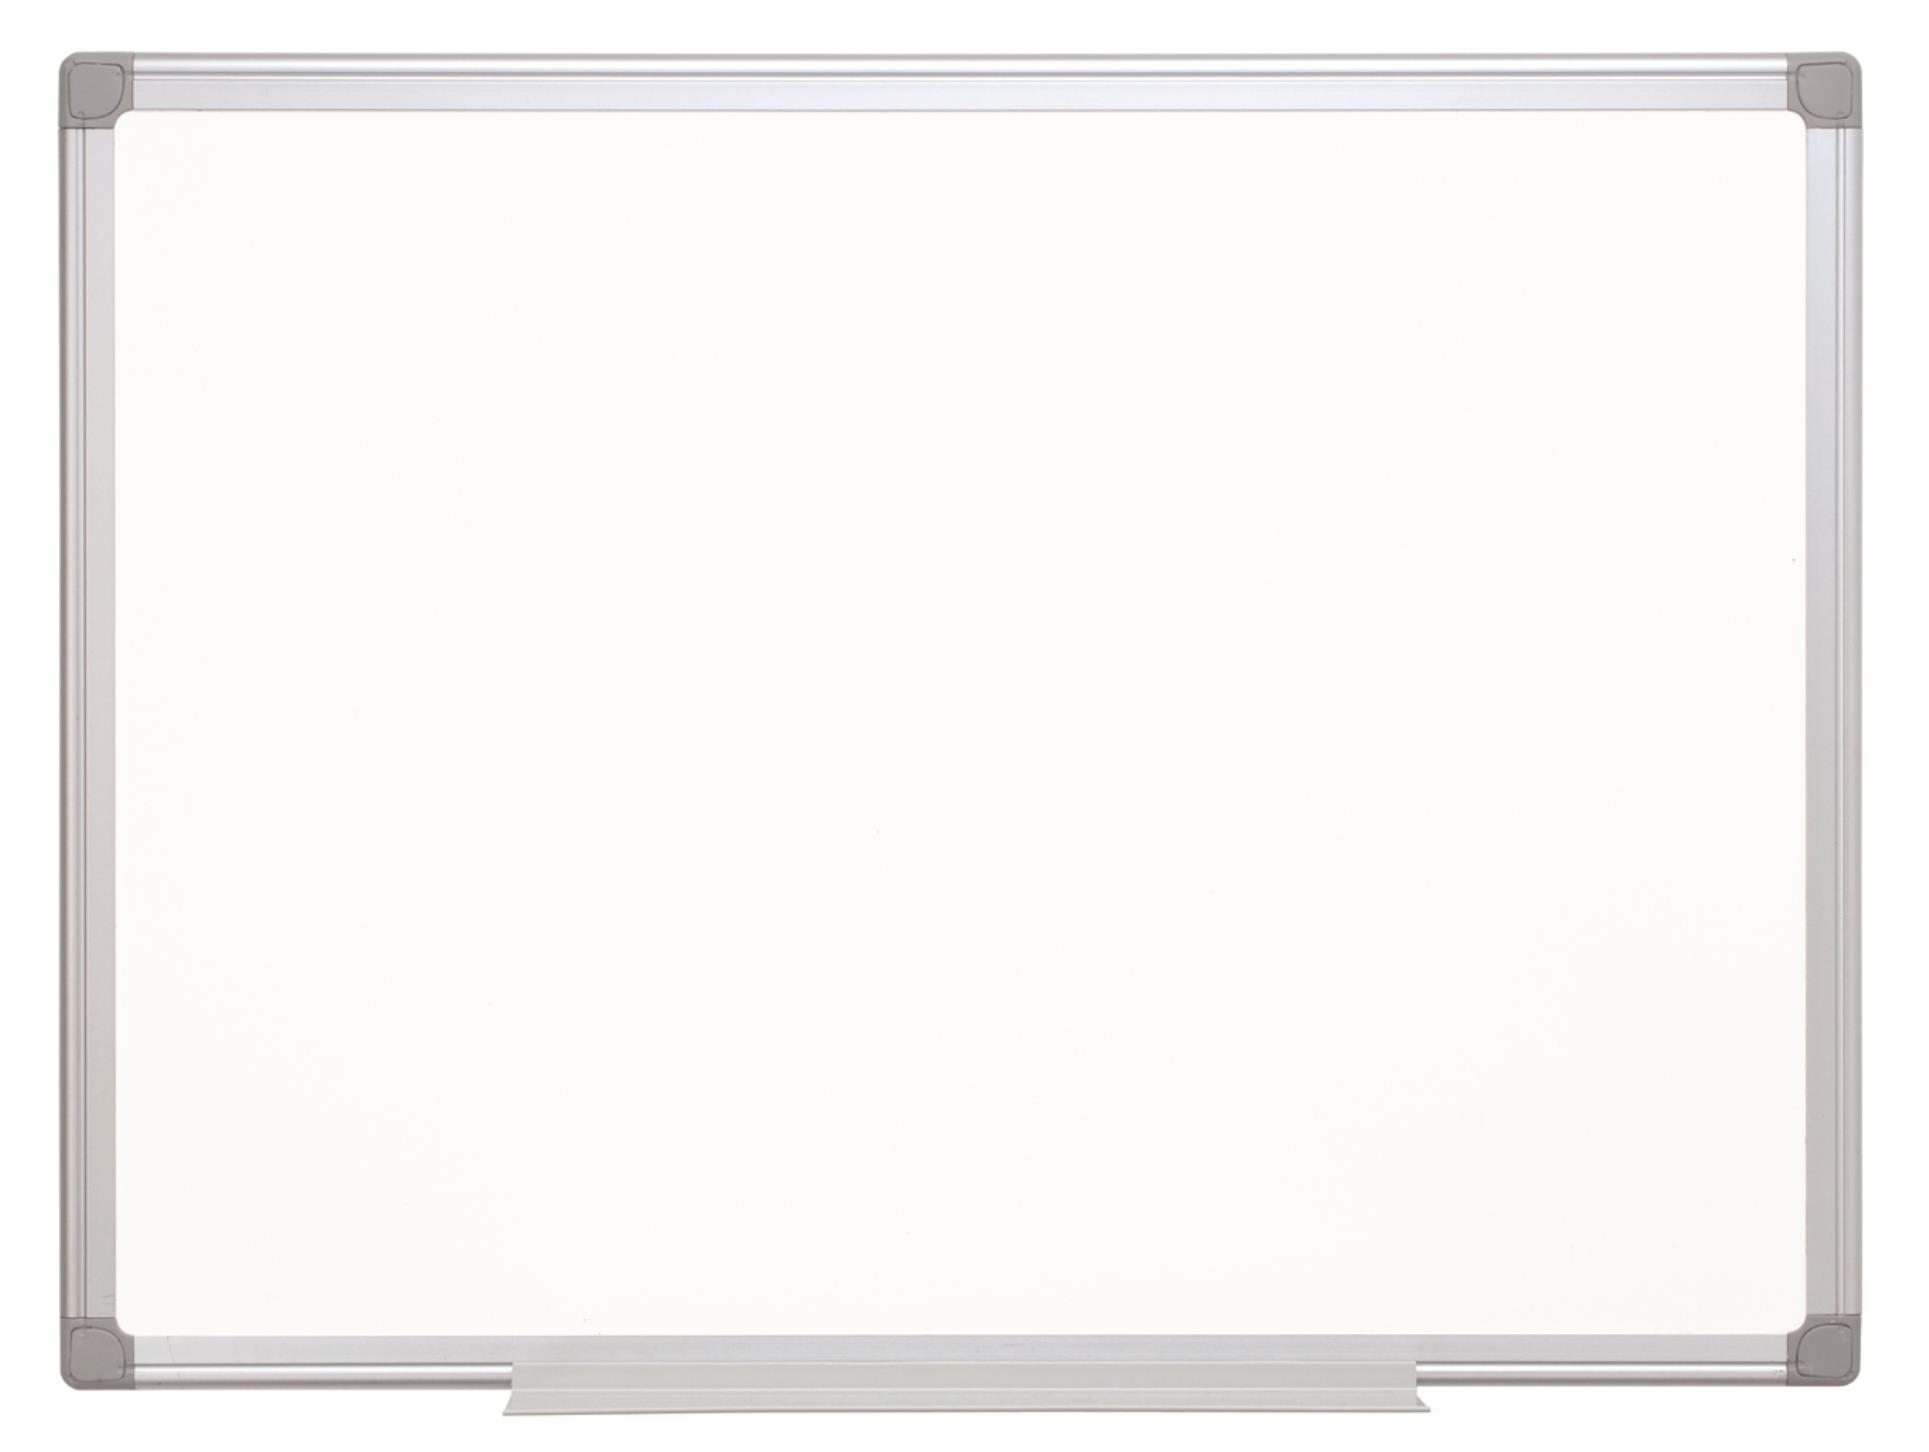 Lakovaná magnetická tabule Q-Connect - 180 x 90 cm, bílá